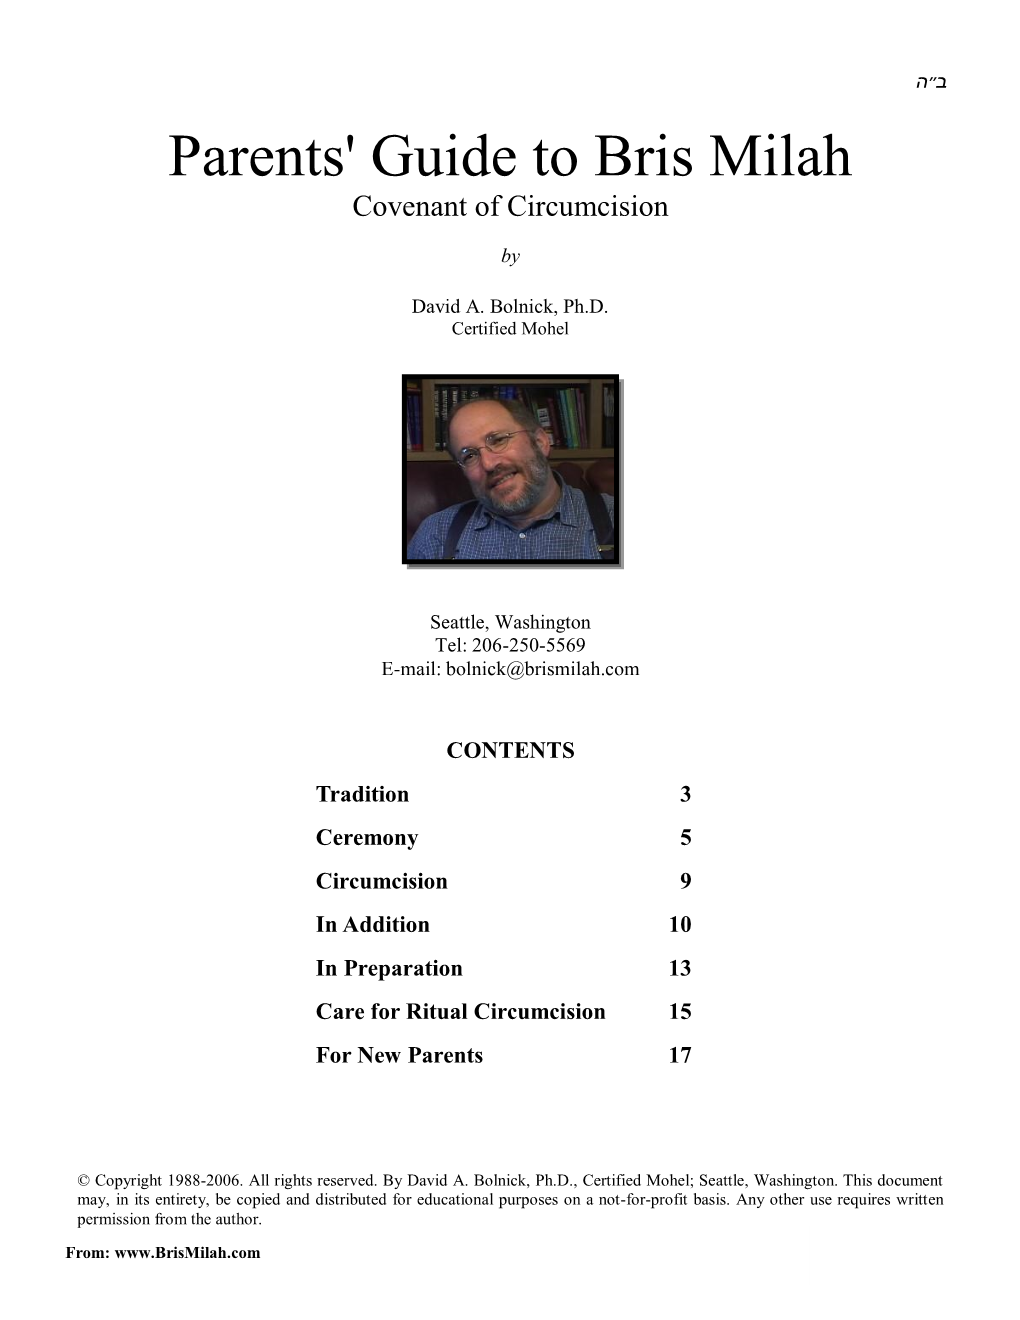 Parents' Guide to Bris Milah Covenant of Circumcision